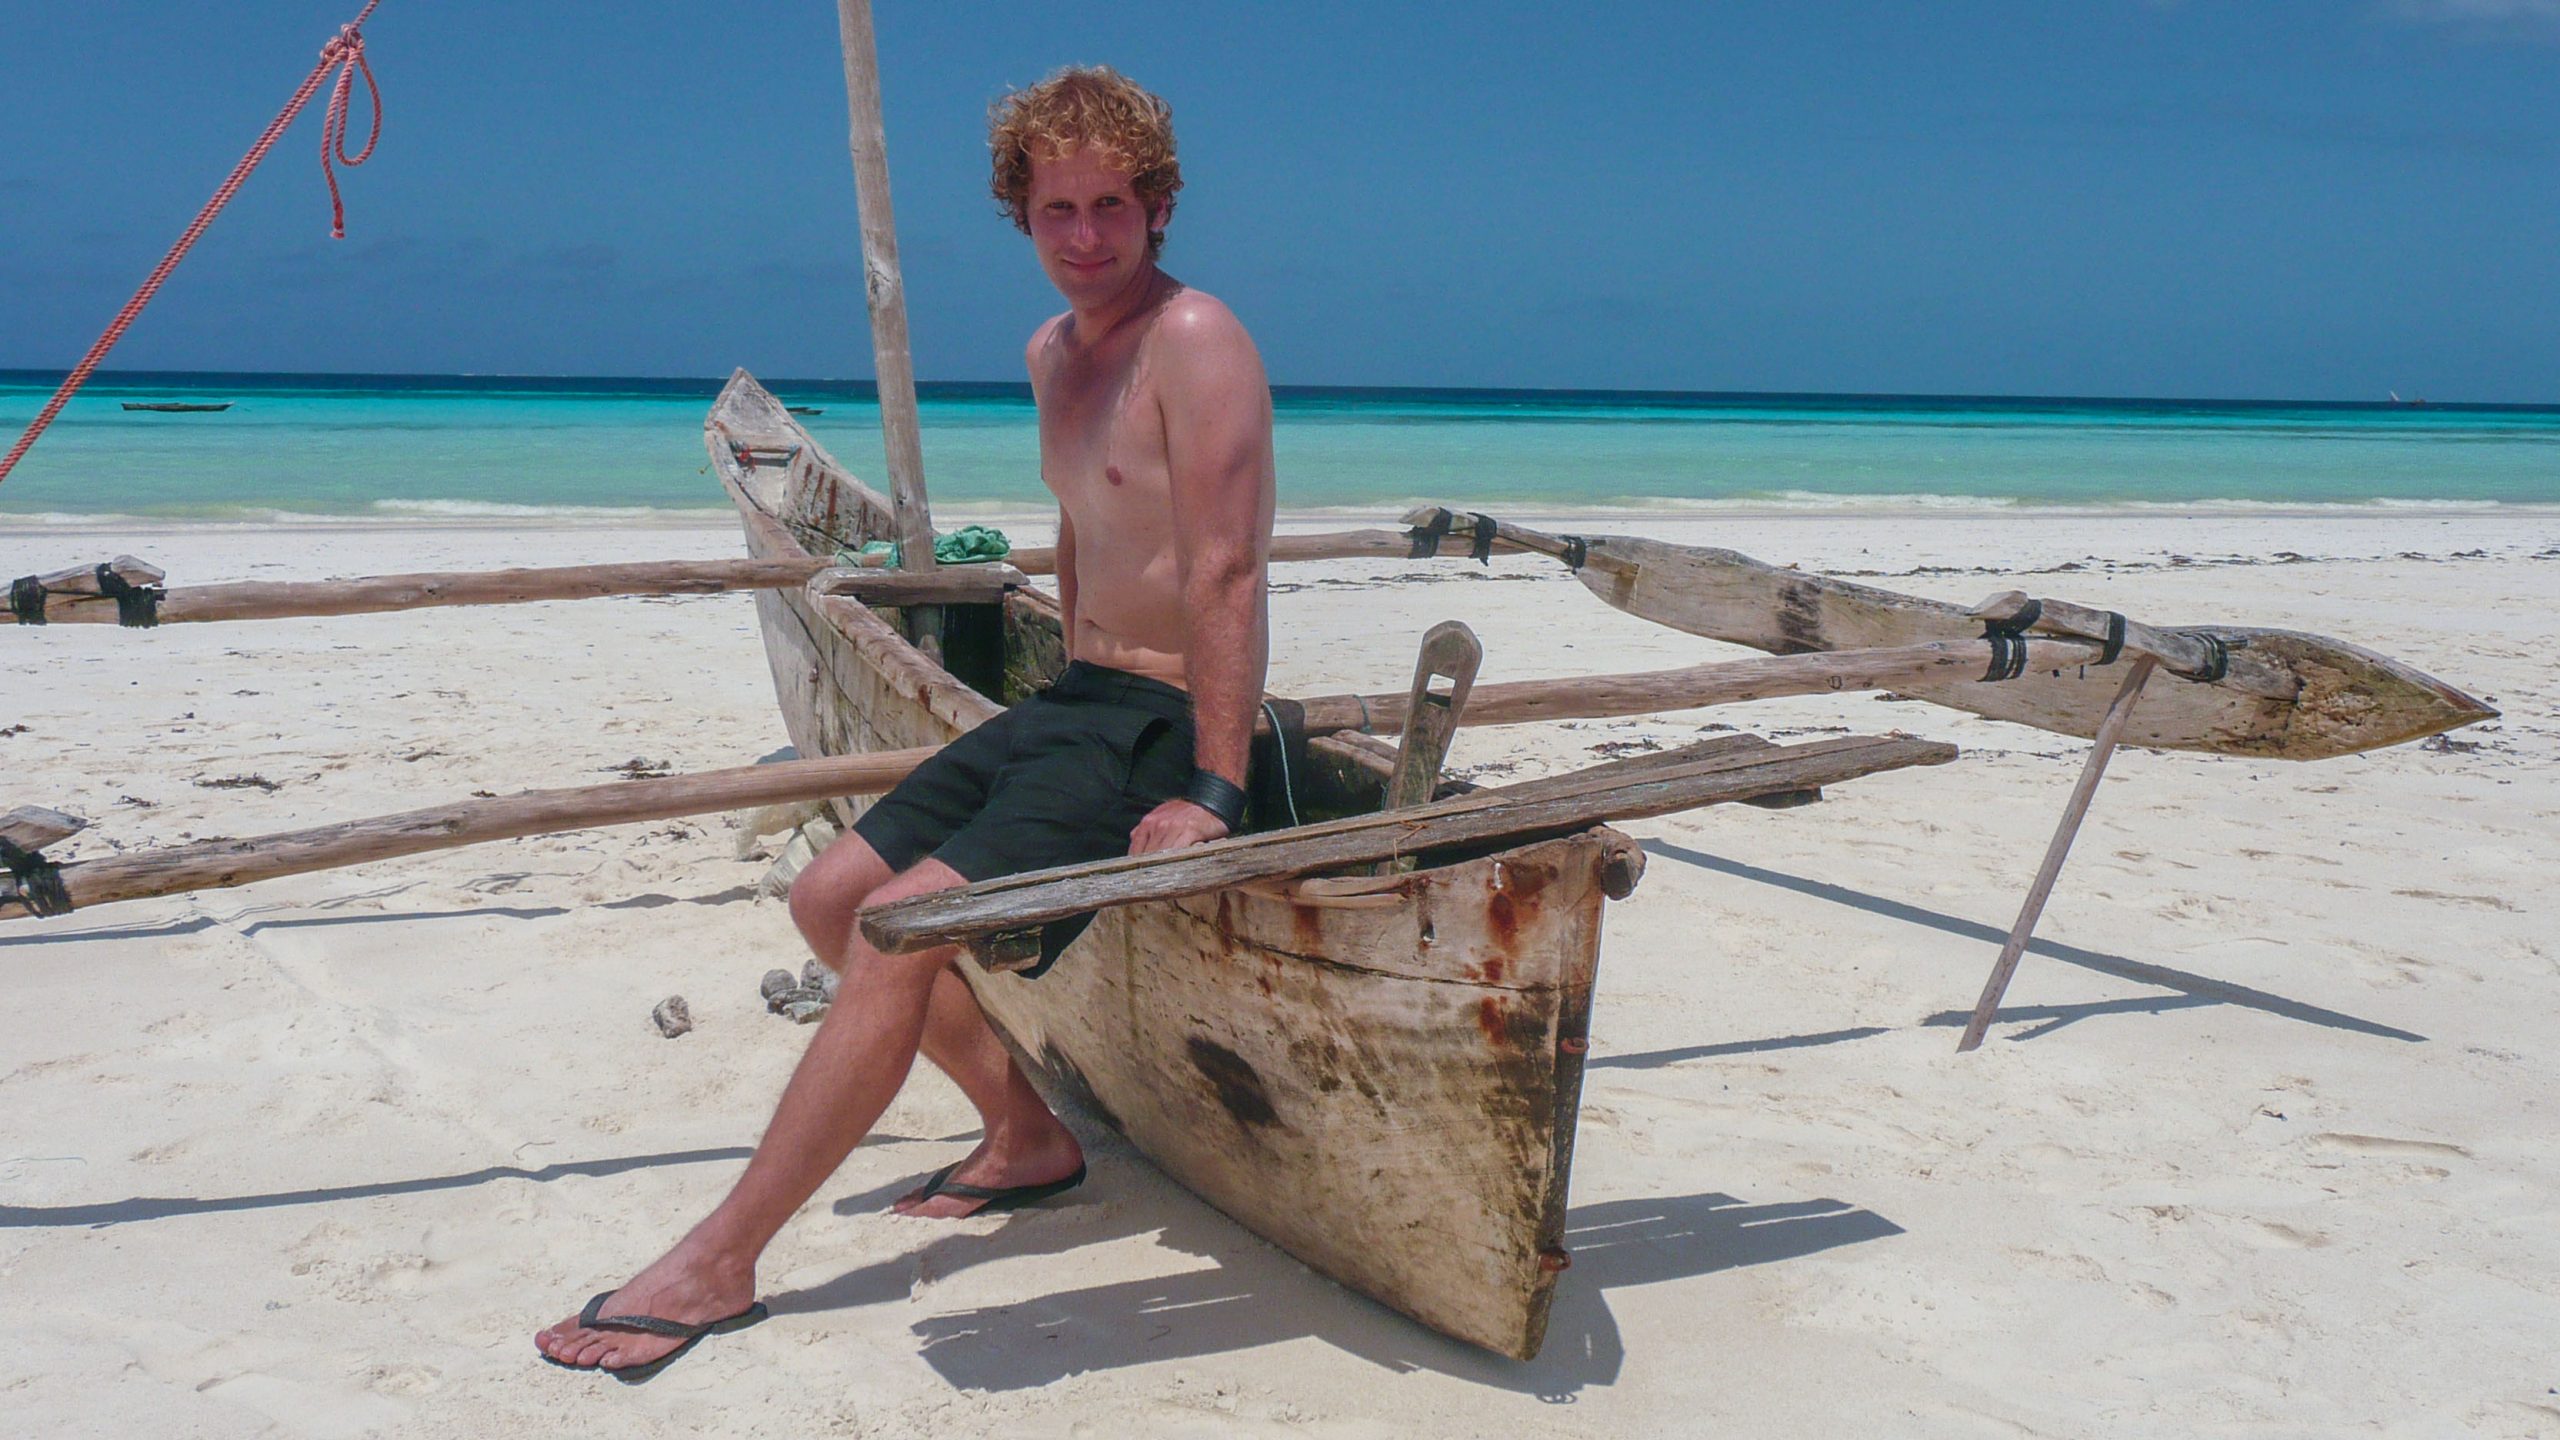 Shirtless Ben sitting on dugout canoe on beach of Zanzibar Tanzania